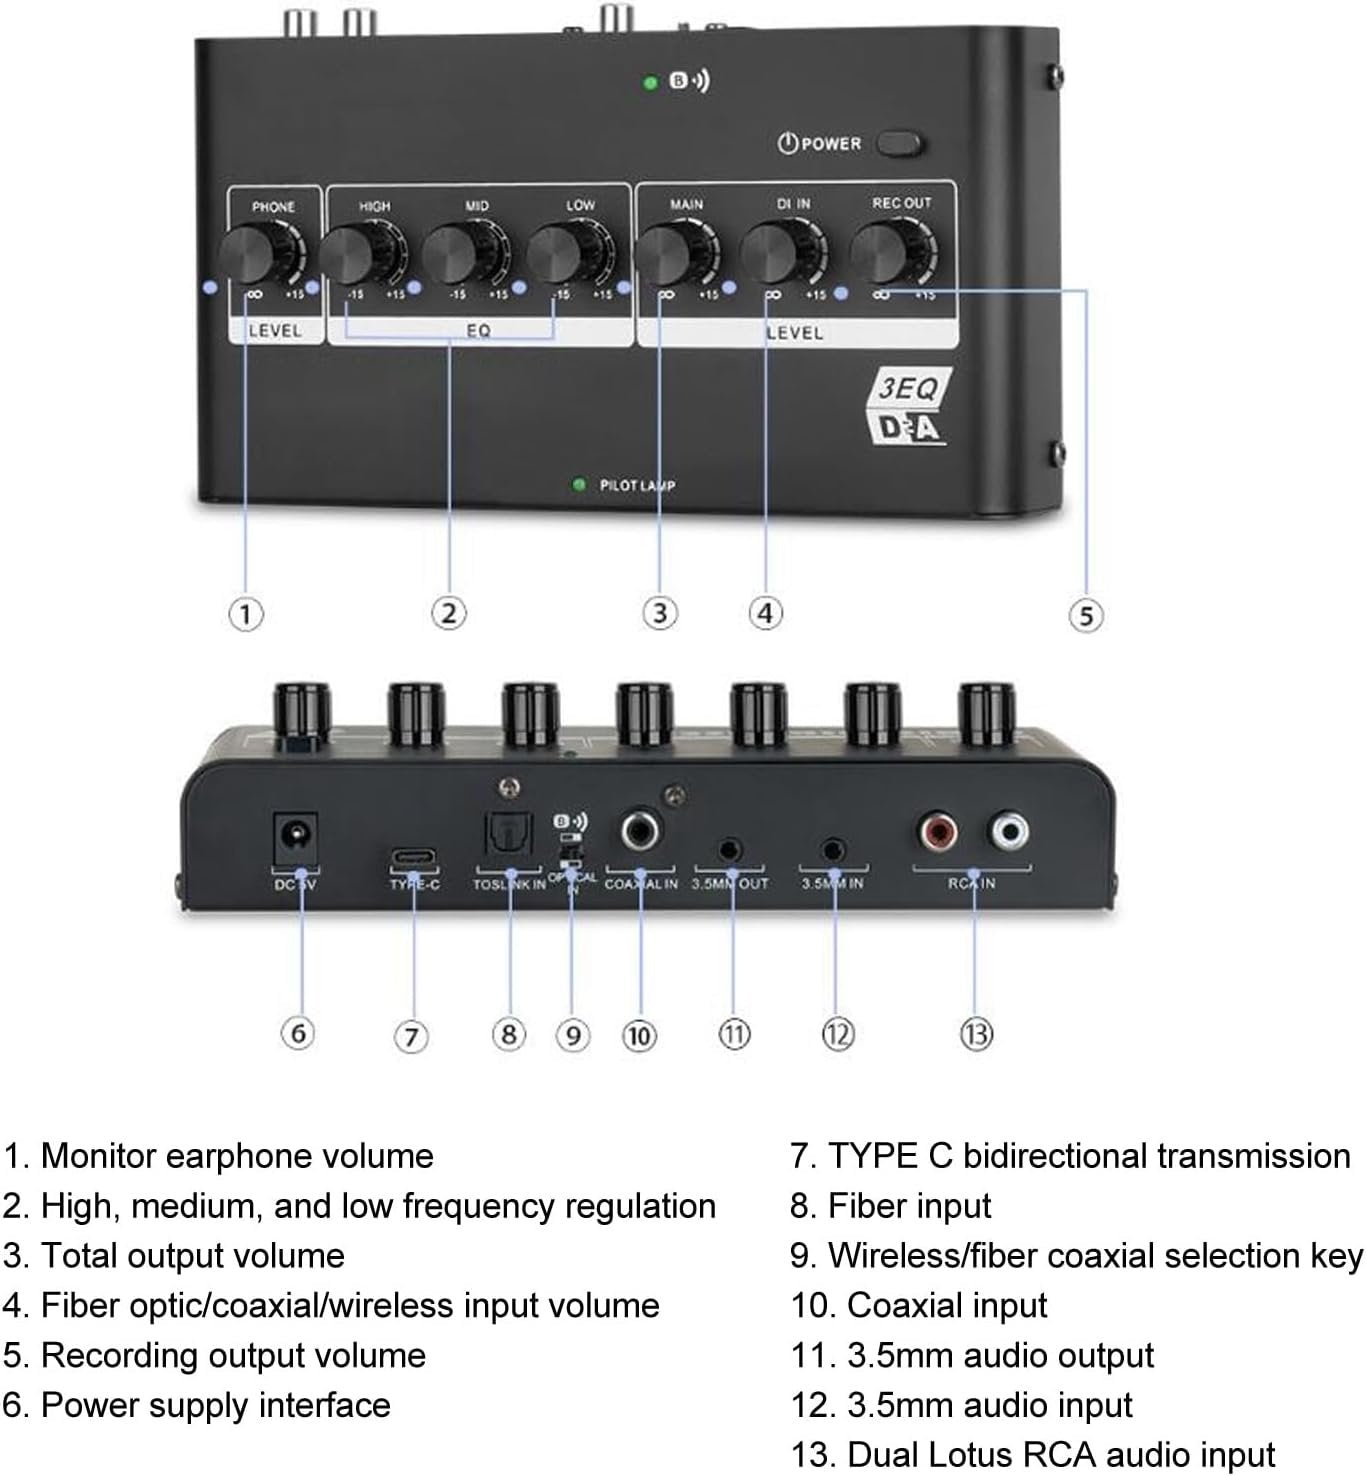 NÖRDIC Digital audio to analog convertor with bluetooth